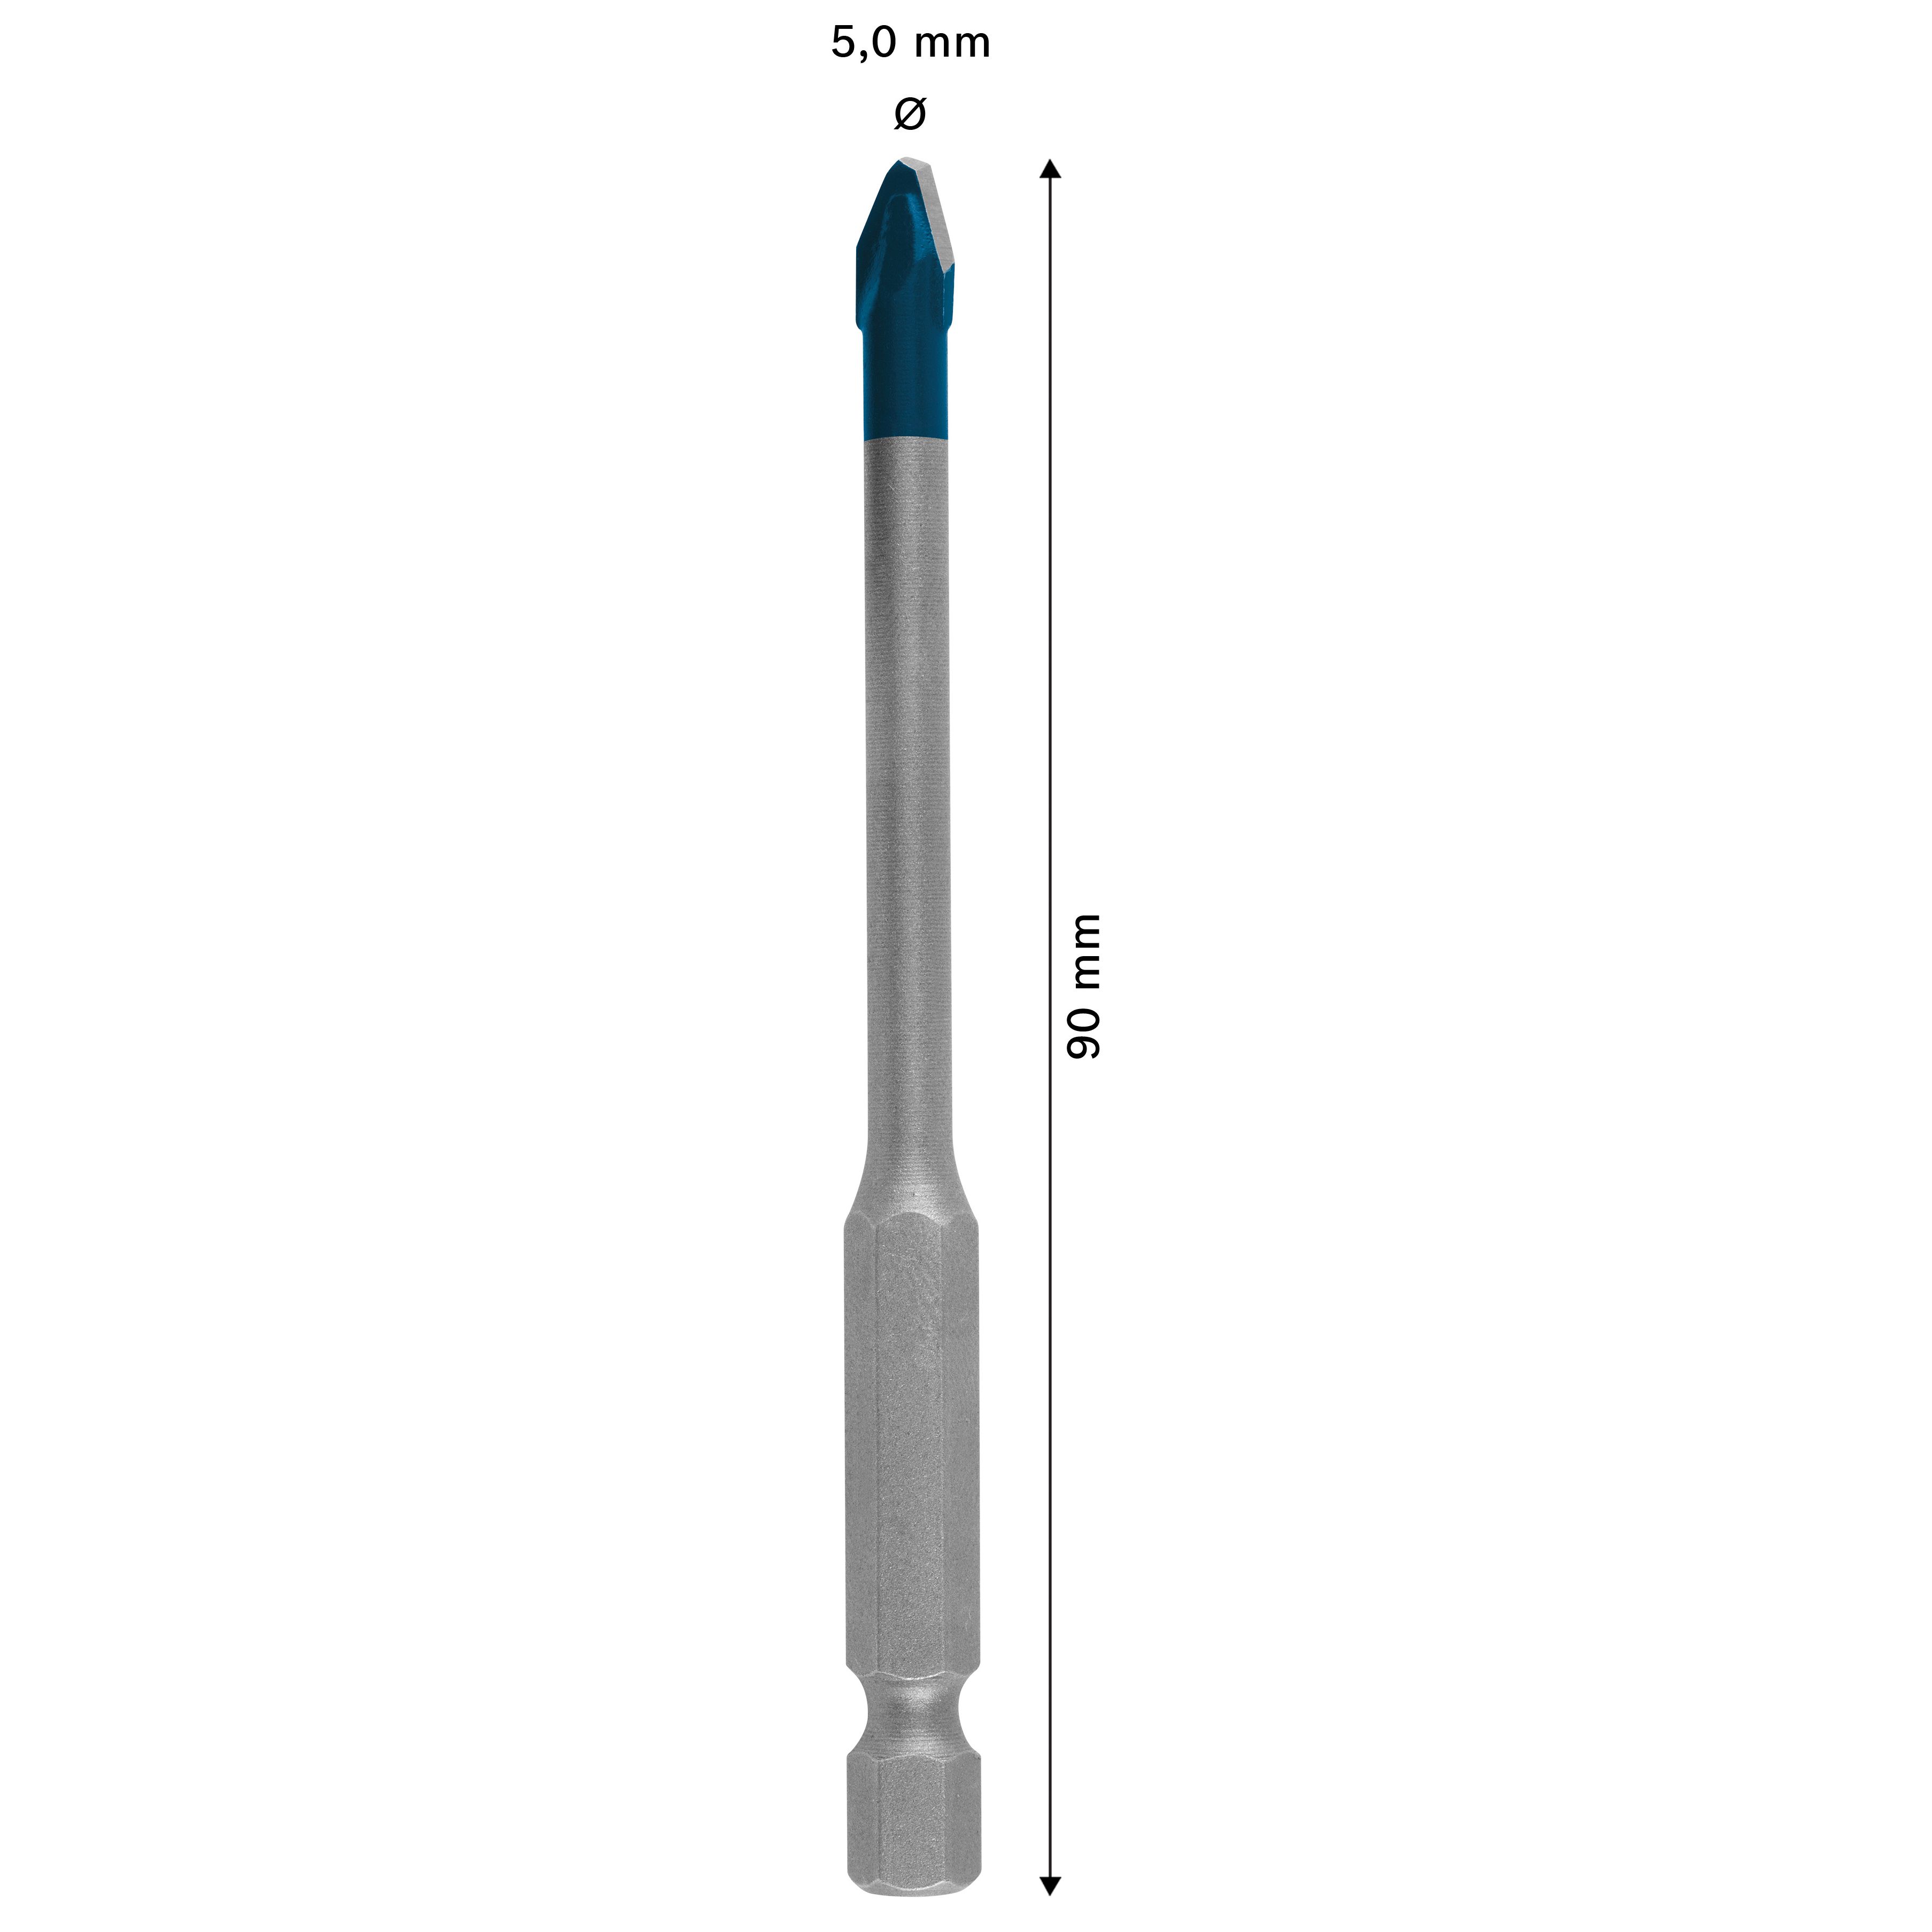 Bosch Professional Tile drill bit (Dia)5mm